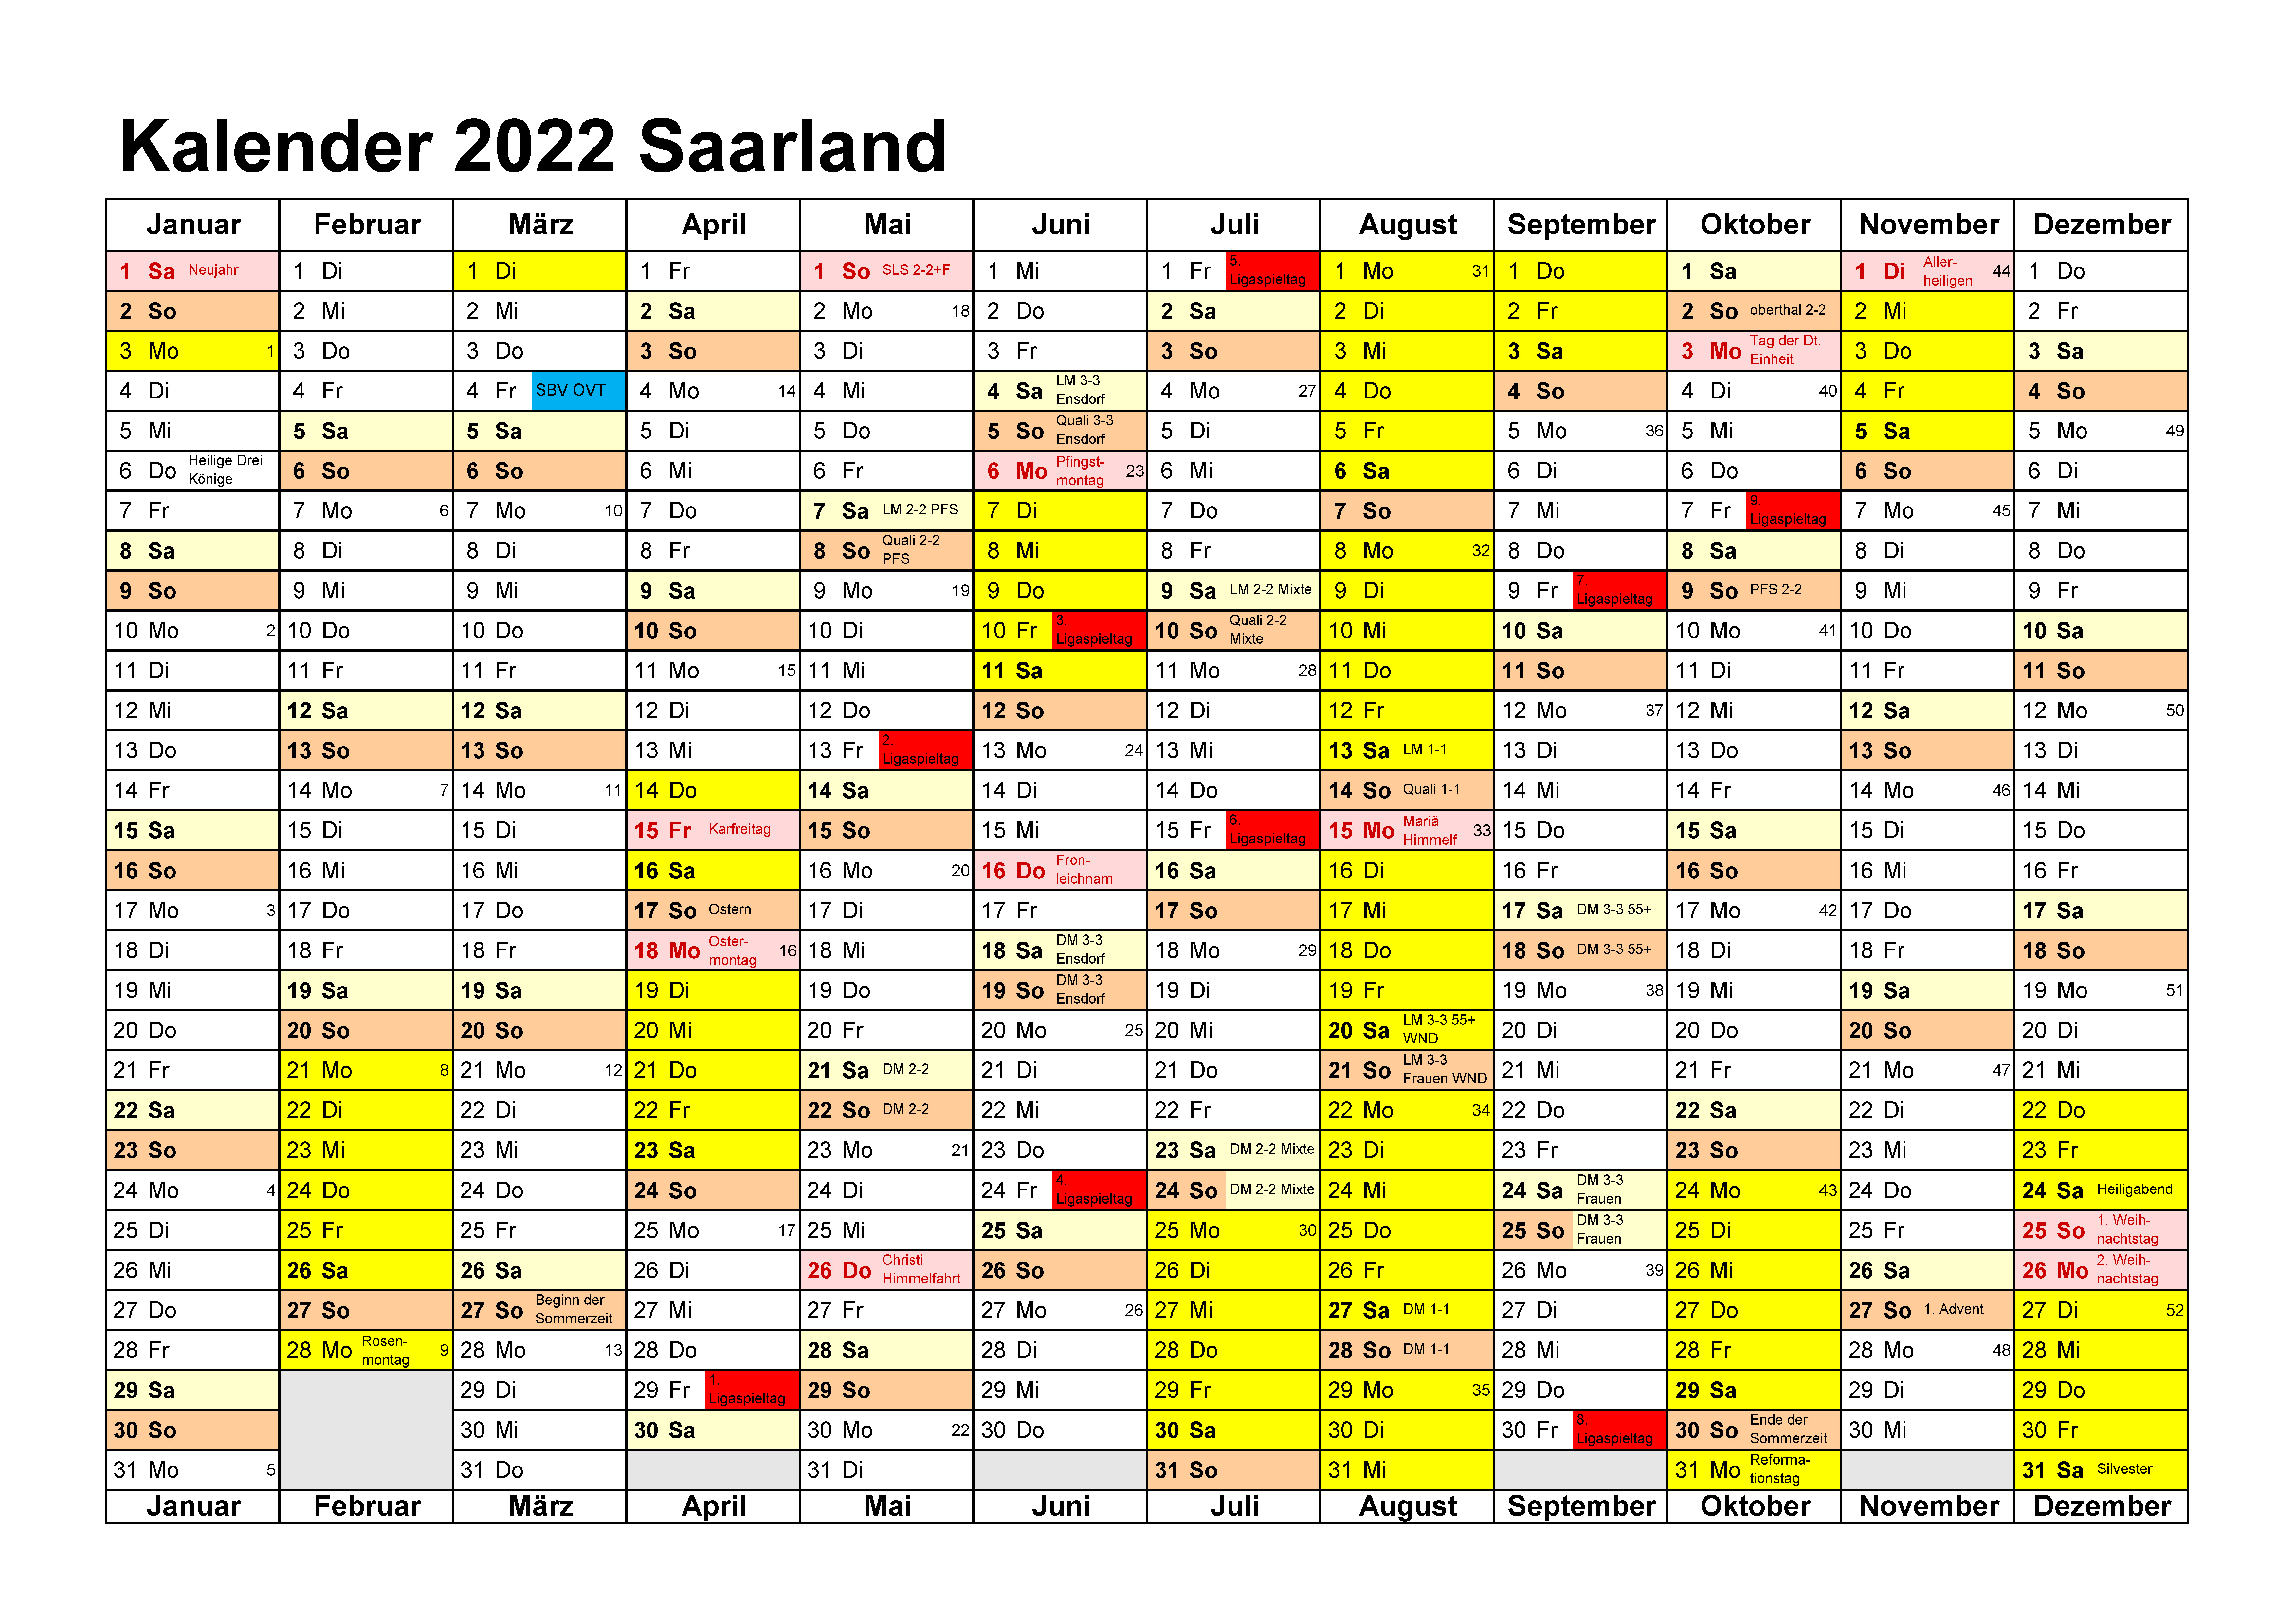 SBV Kalender 2022